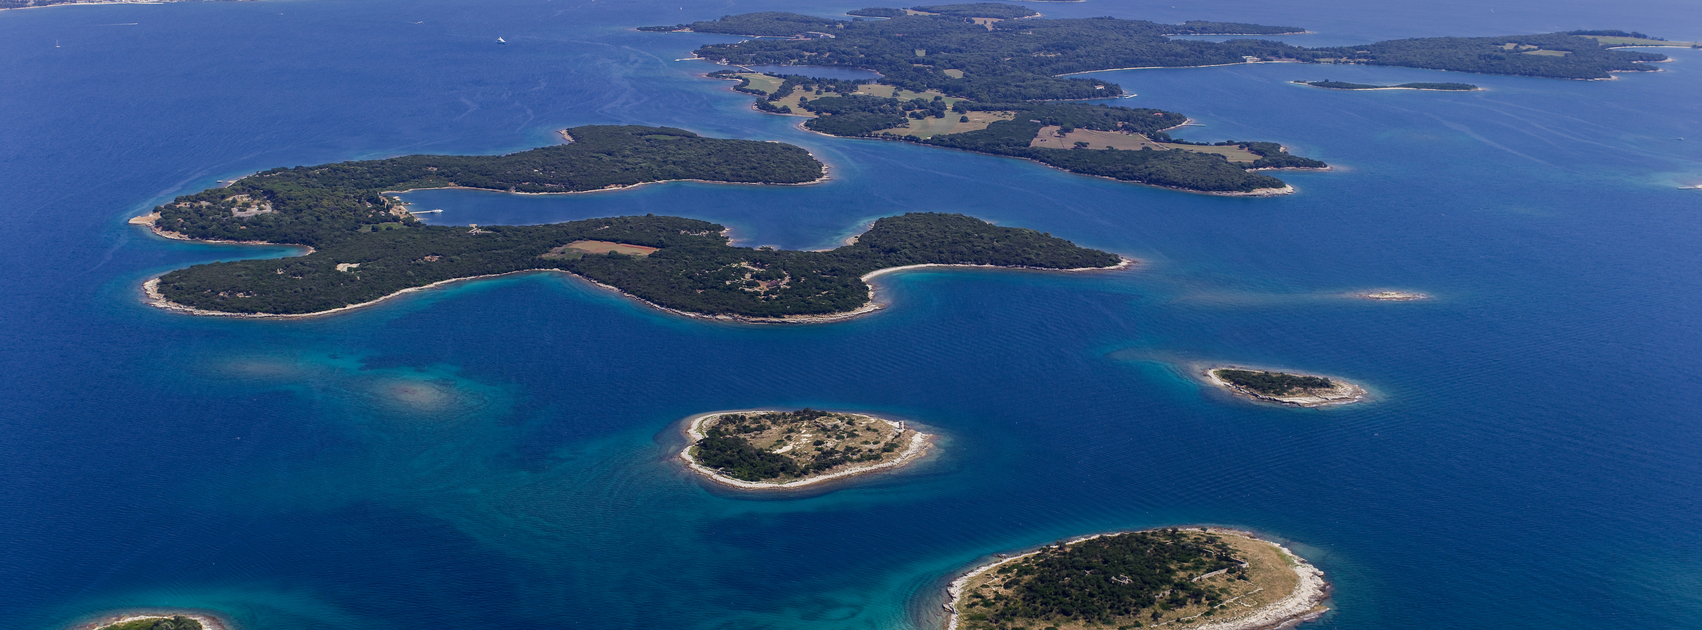 brijuni-islands-aerial-view2